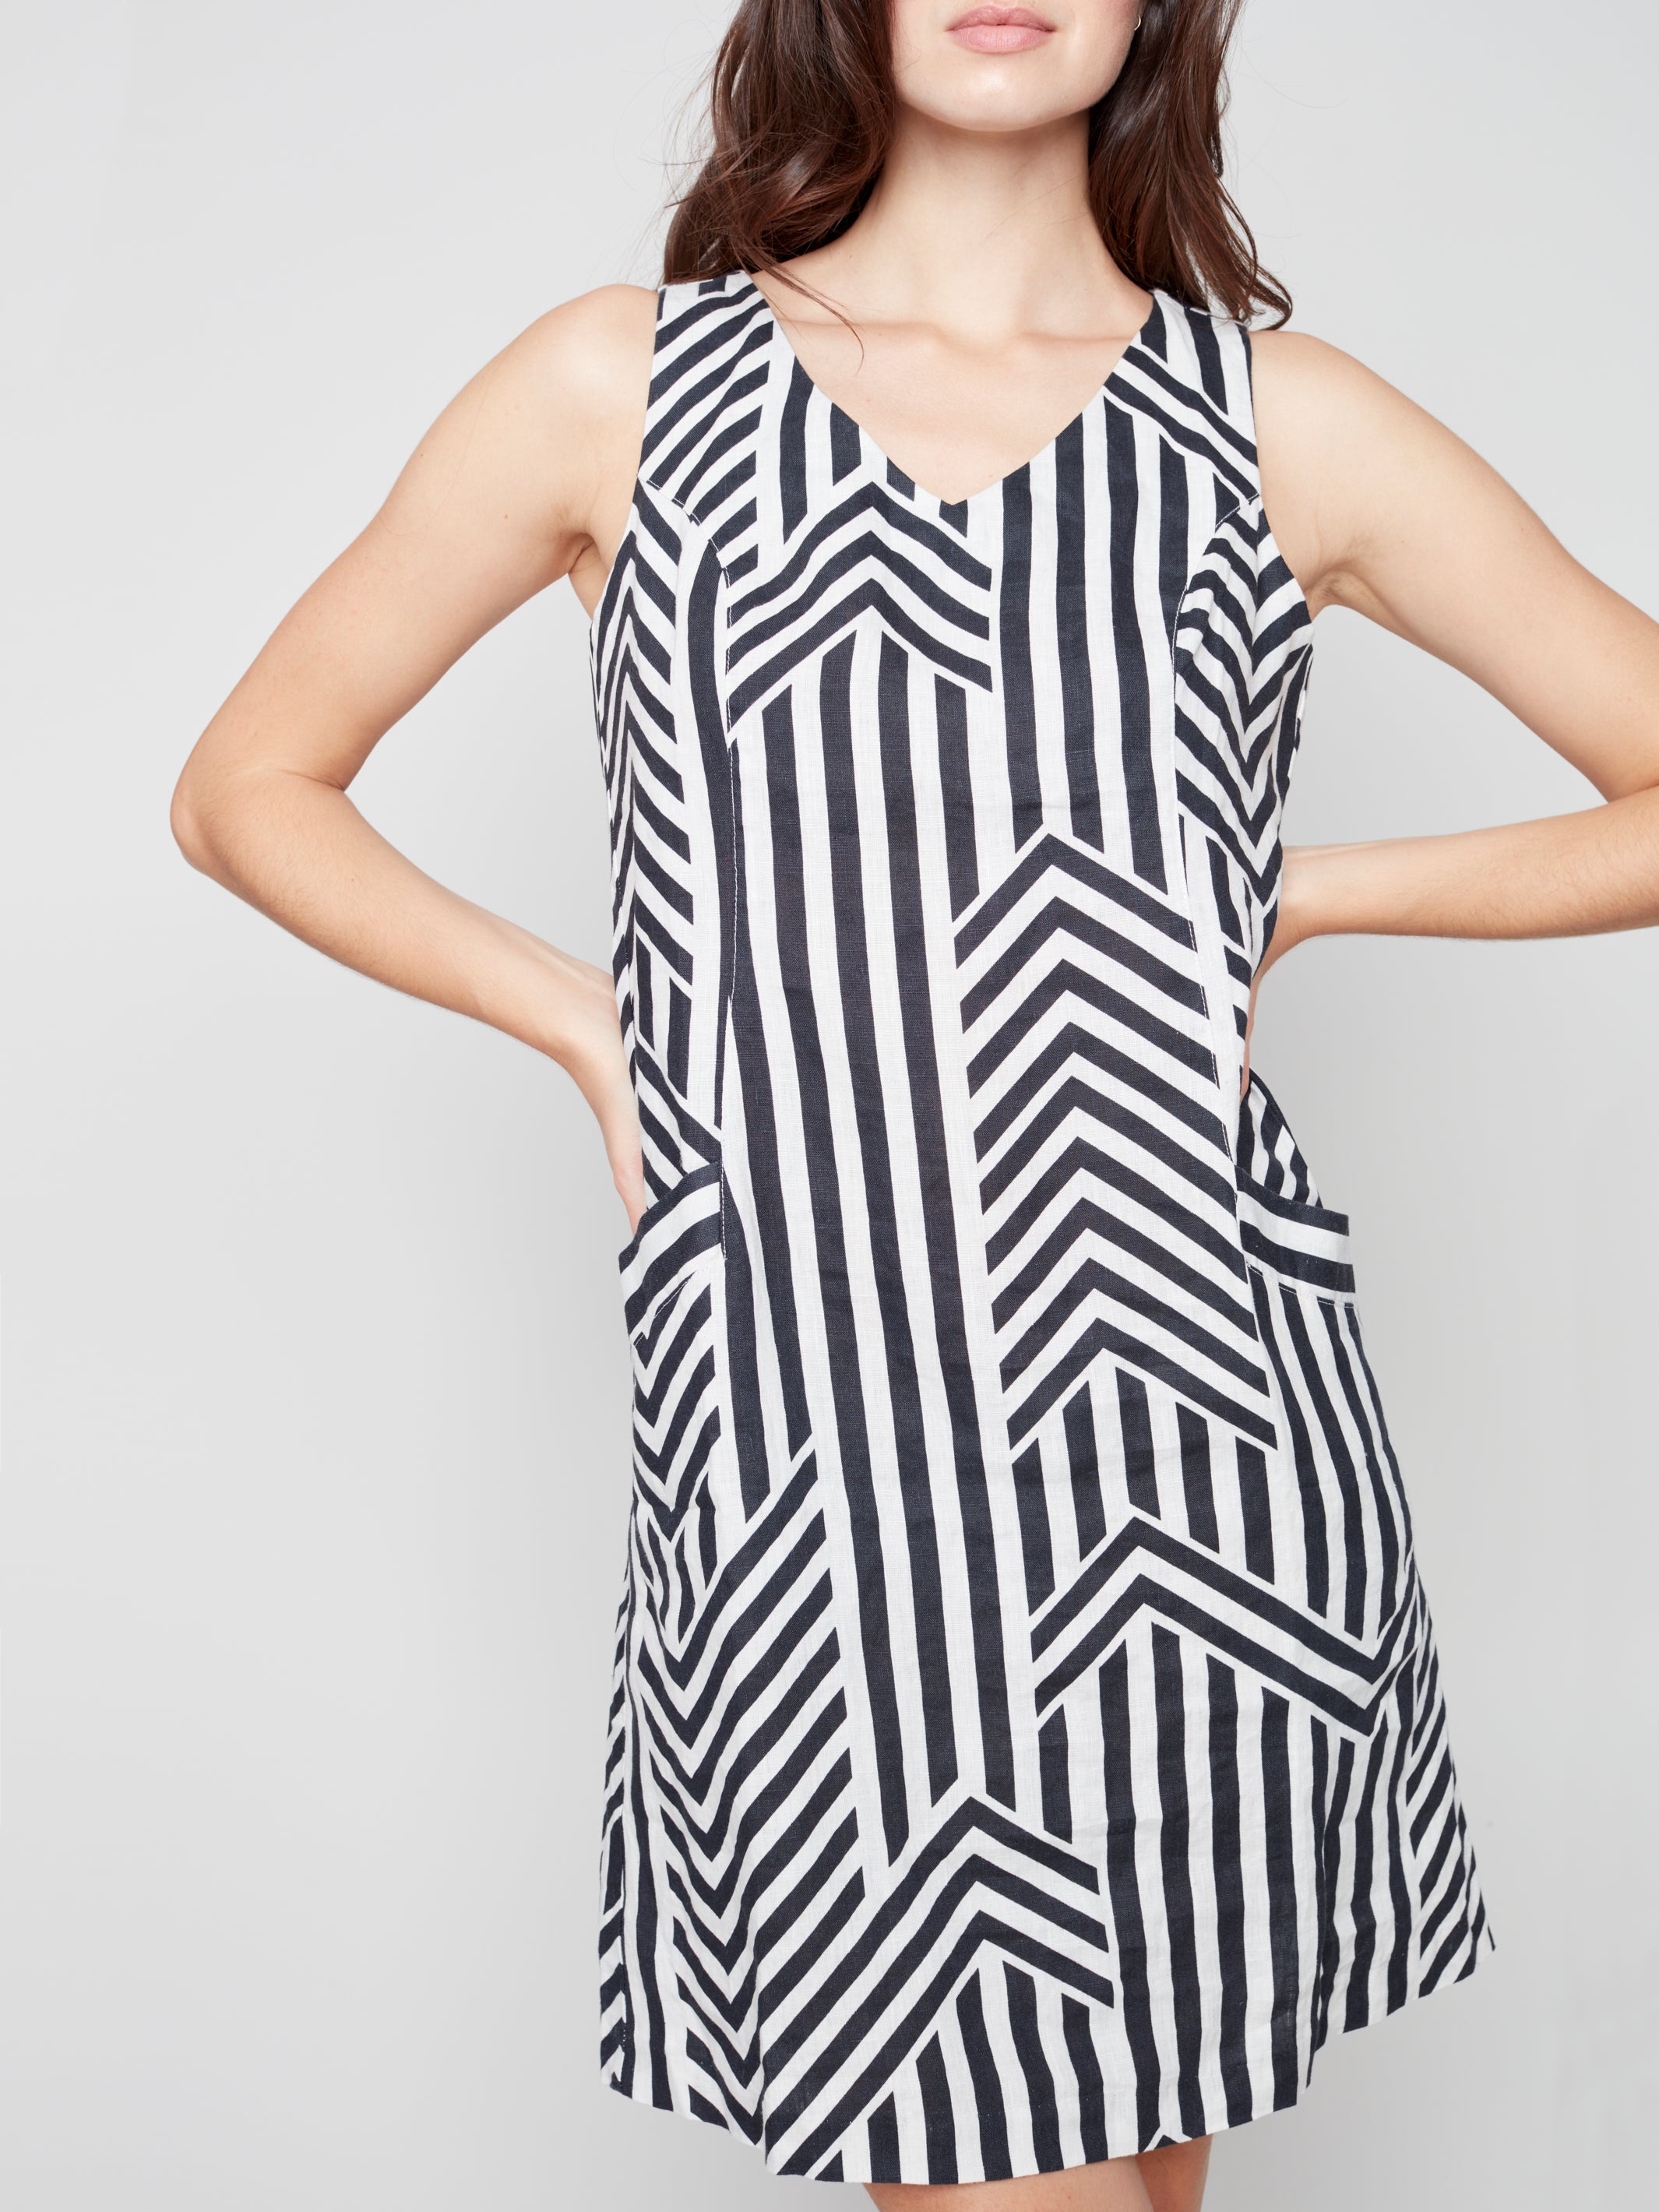 Geometric Printed Linen Dress by Charlie B